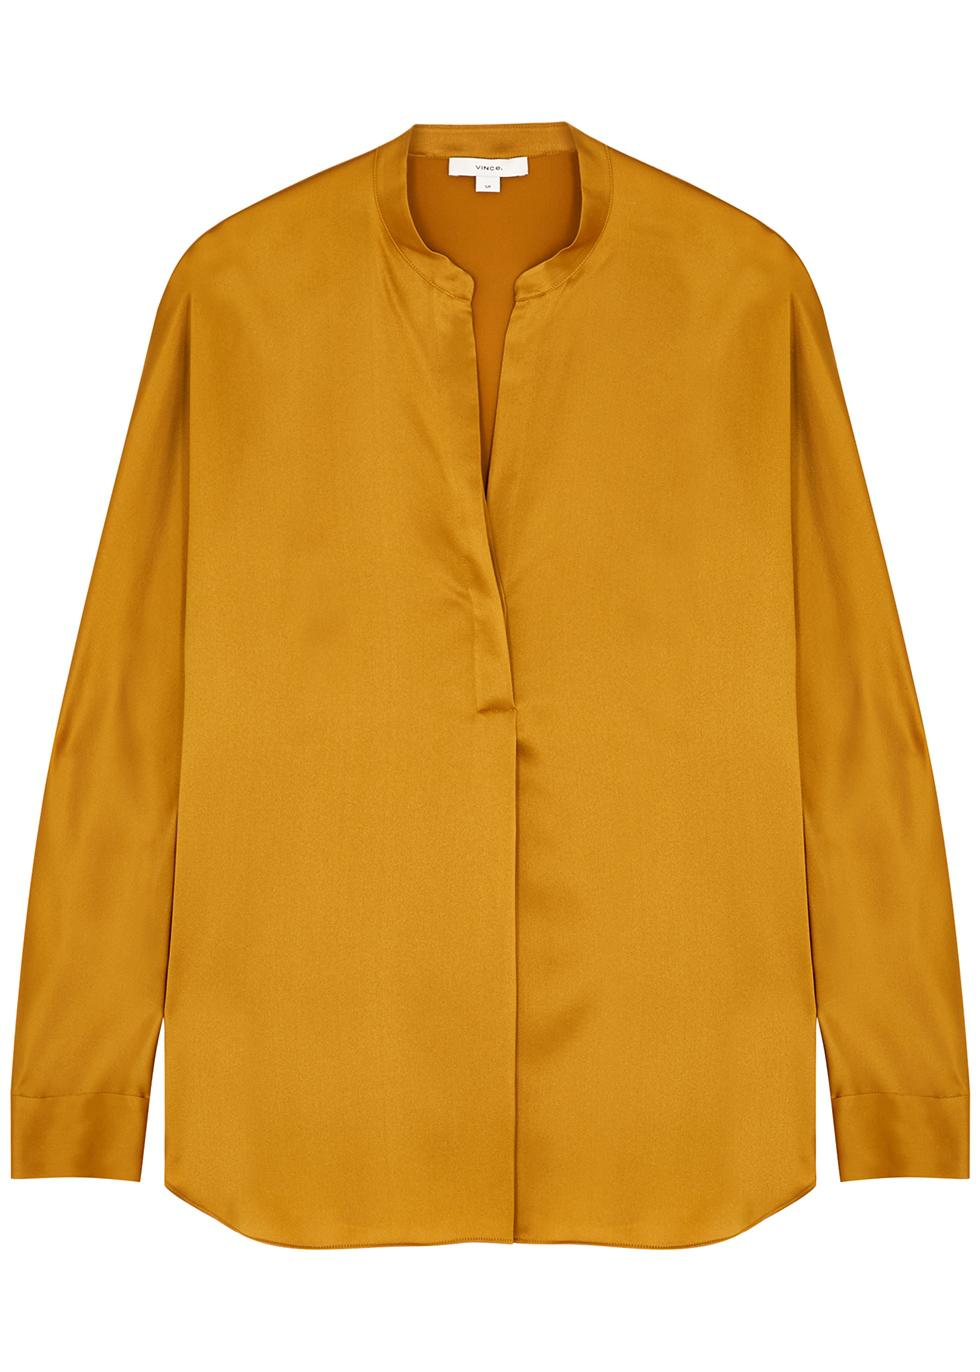 Orange silk-satin blouse by VINCE